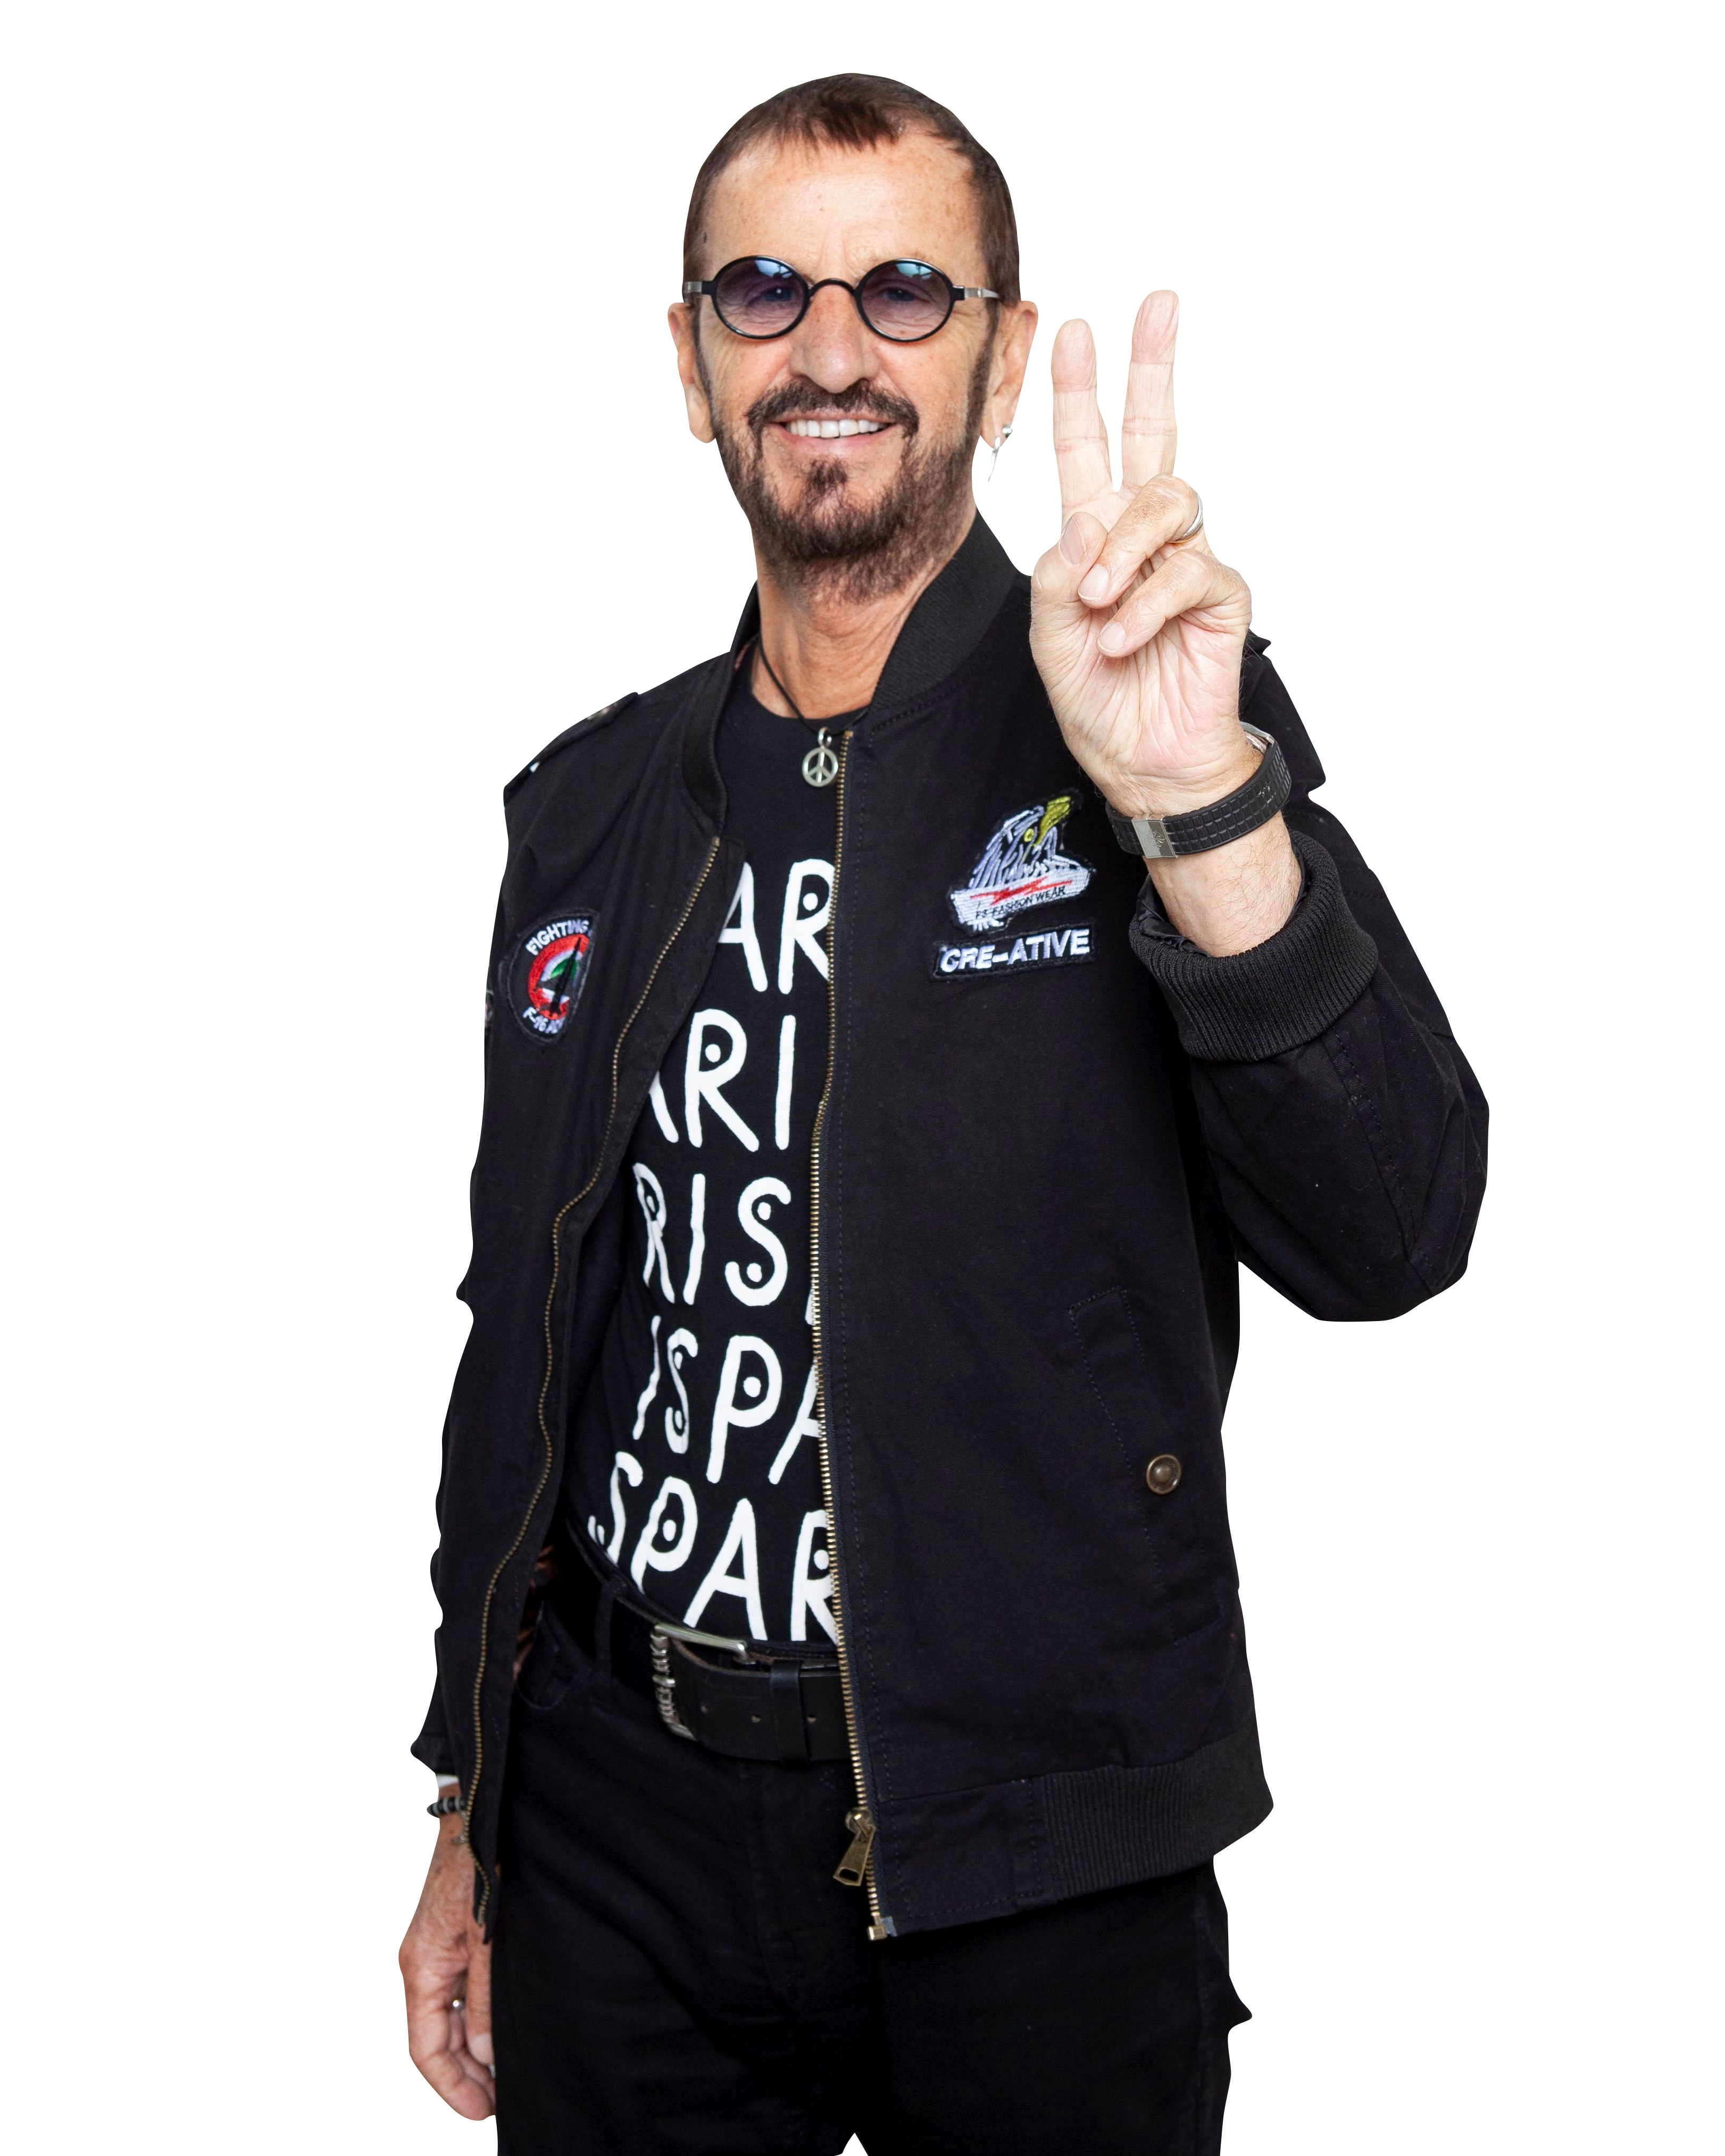 Ringo Starr talks All-Starr tour, why he won't write Beatles memoir